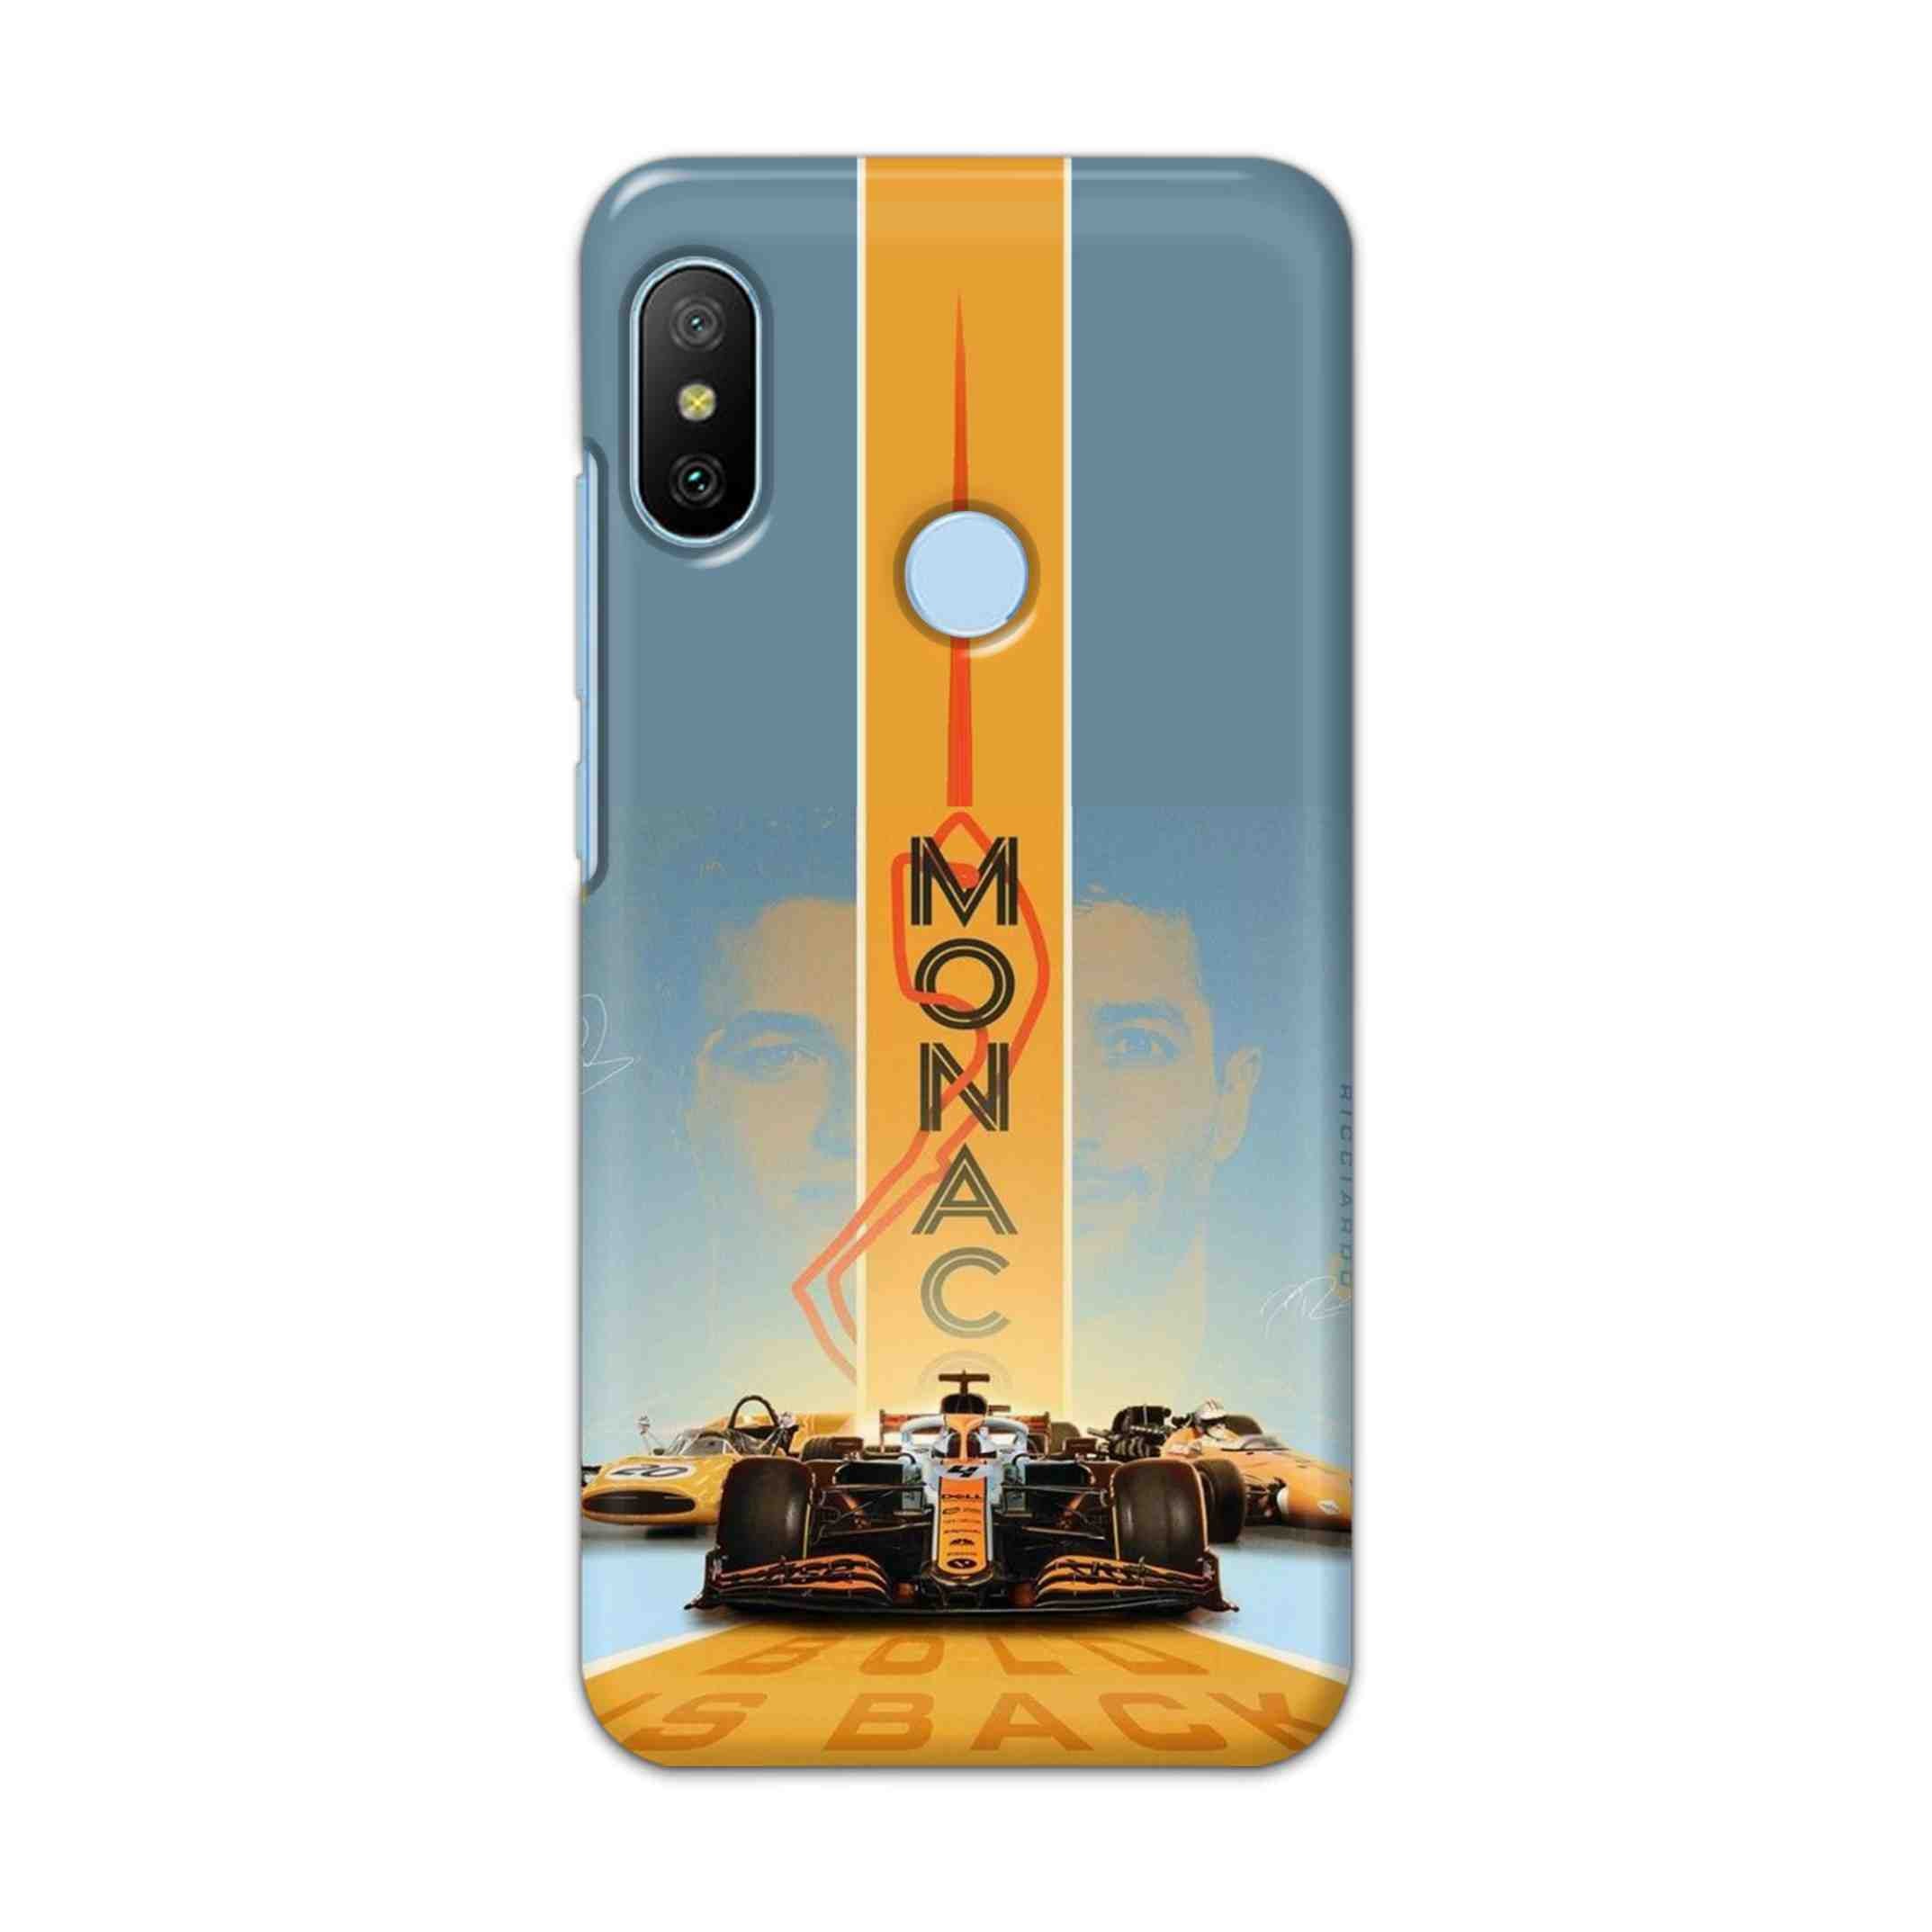 Buy Monac Formula Hard Back Mobile Phone Case/Cover For Xiaomi Redmi 6 Pro Online